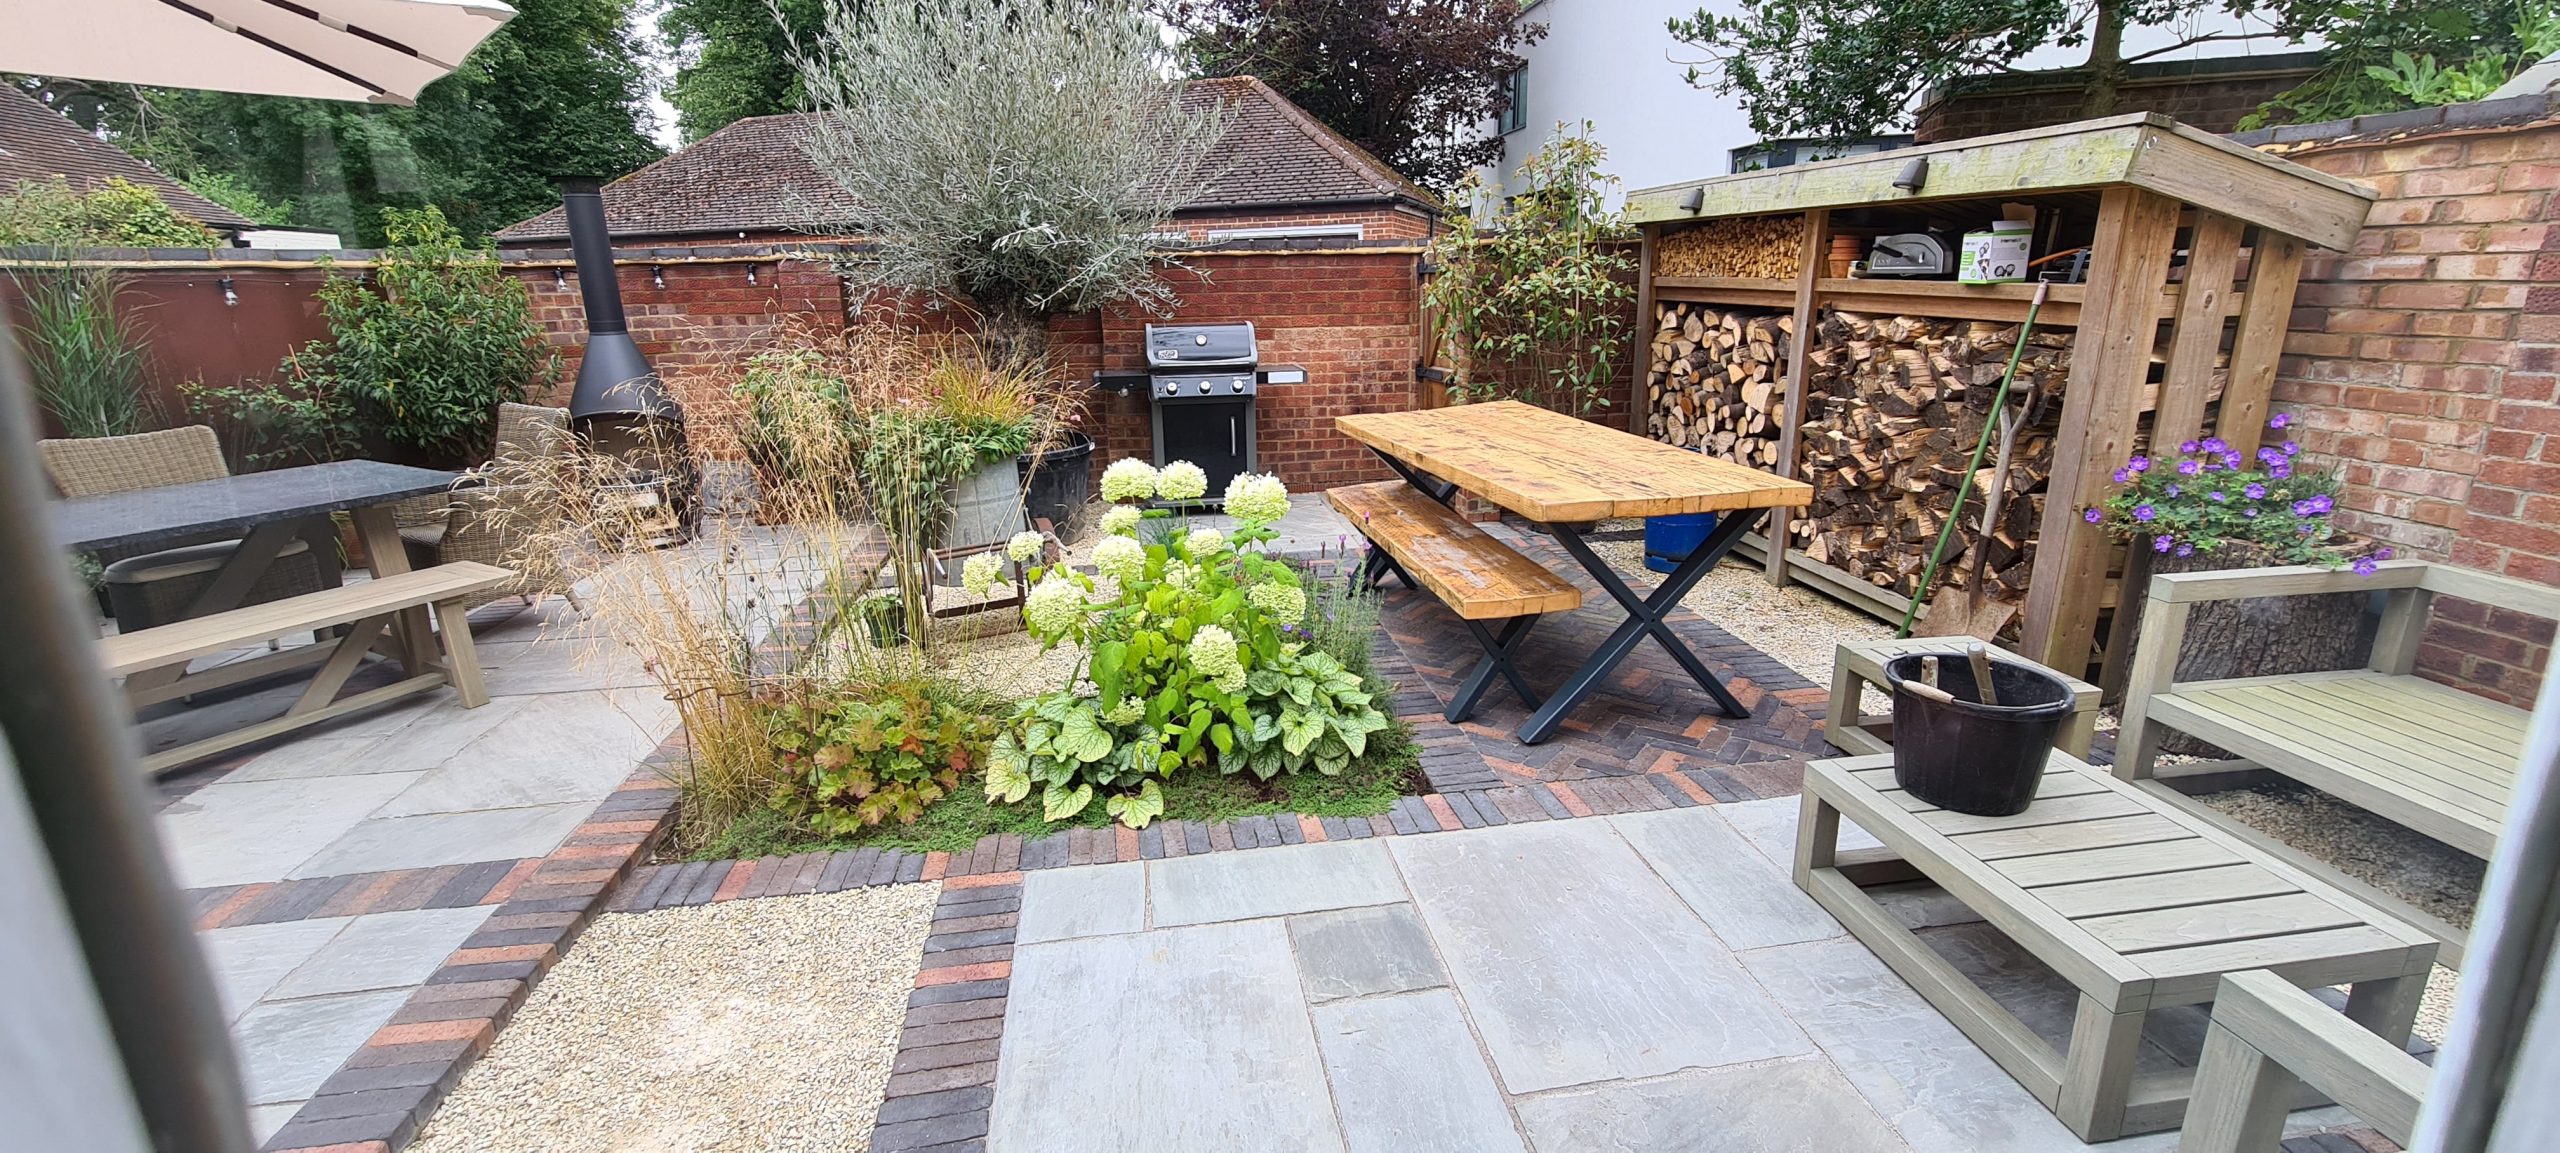 Full landscape garden with patio, stone and herringbone borders